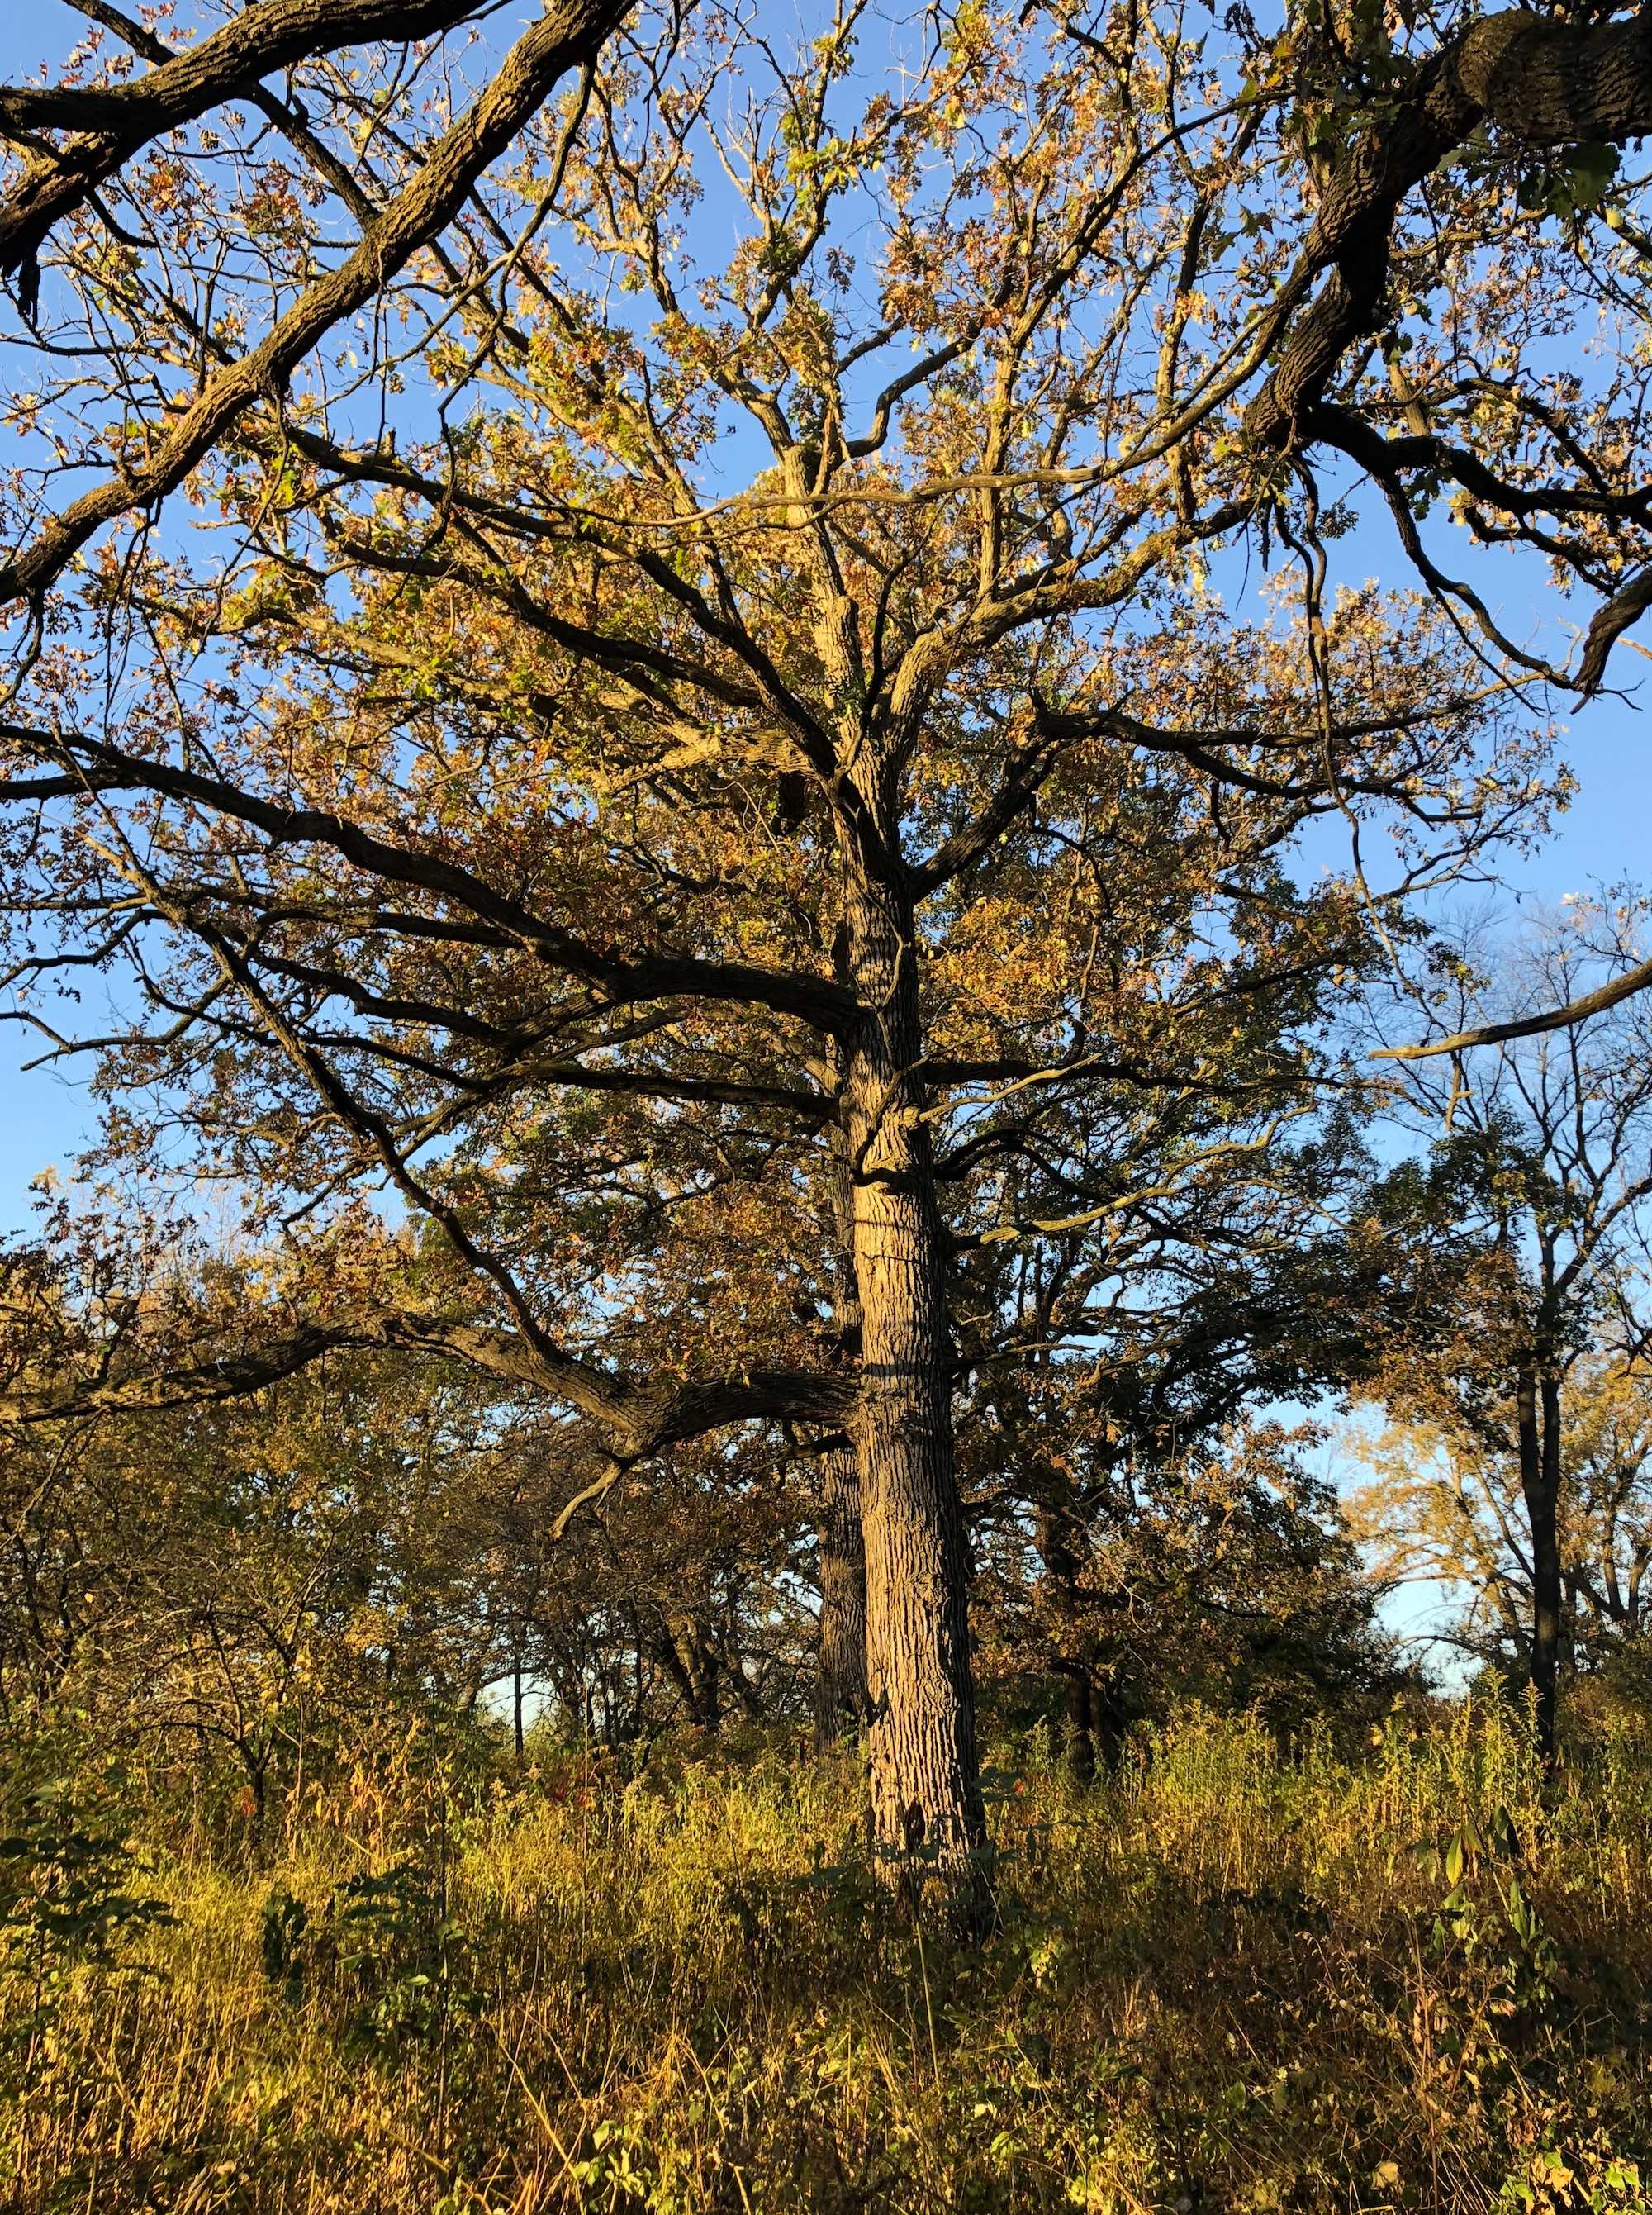 Oak Savanna on October 18, 2018 in University of Wisconsin Arboretum in Madison, Wisconsin on the north shore of Lake Wingra.